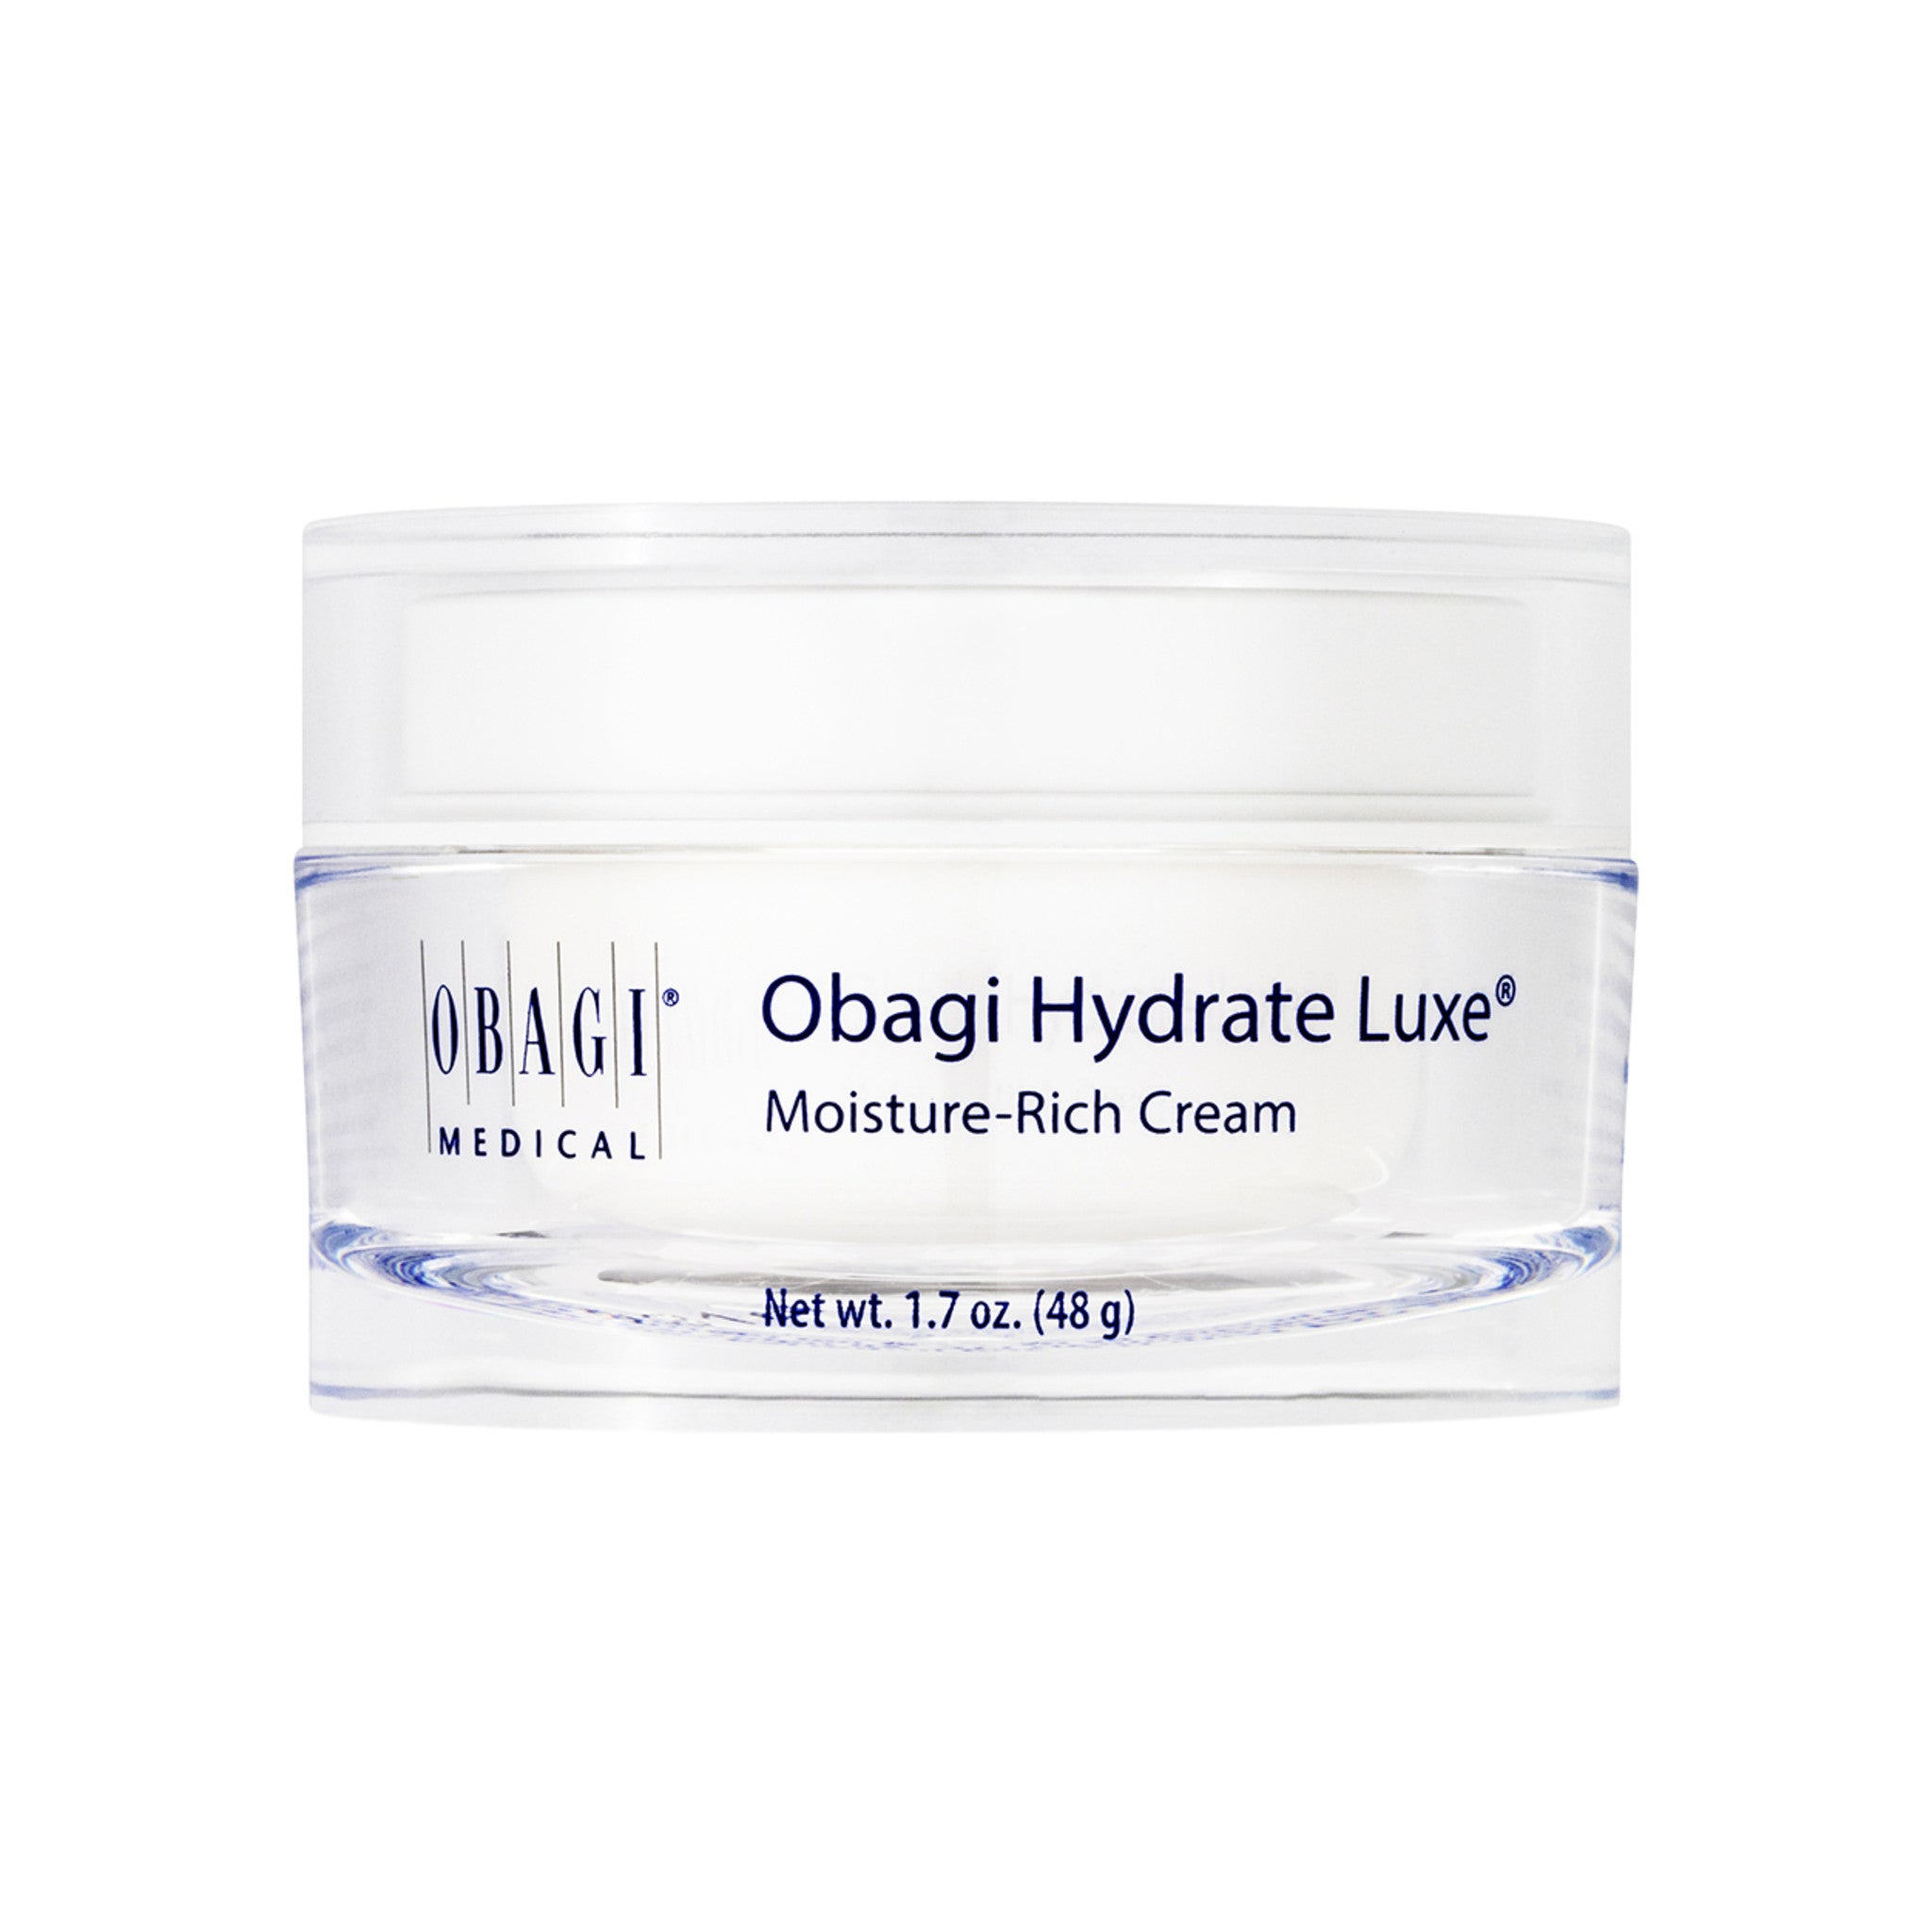 Hydrate Luxe Moisture-Rich Cream main image.